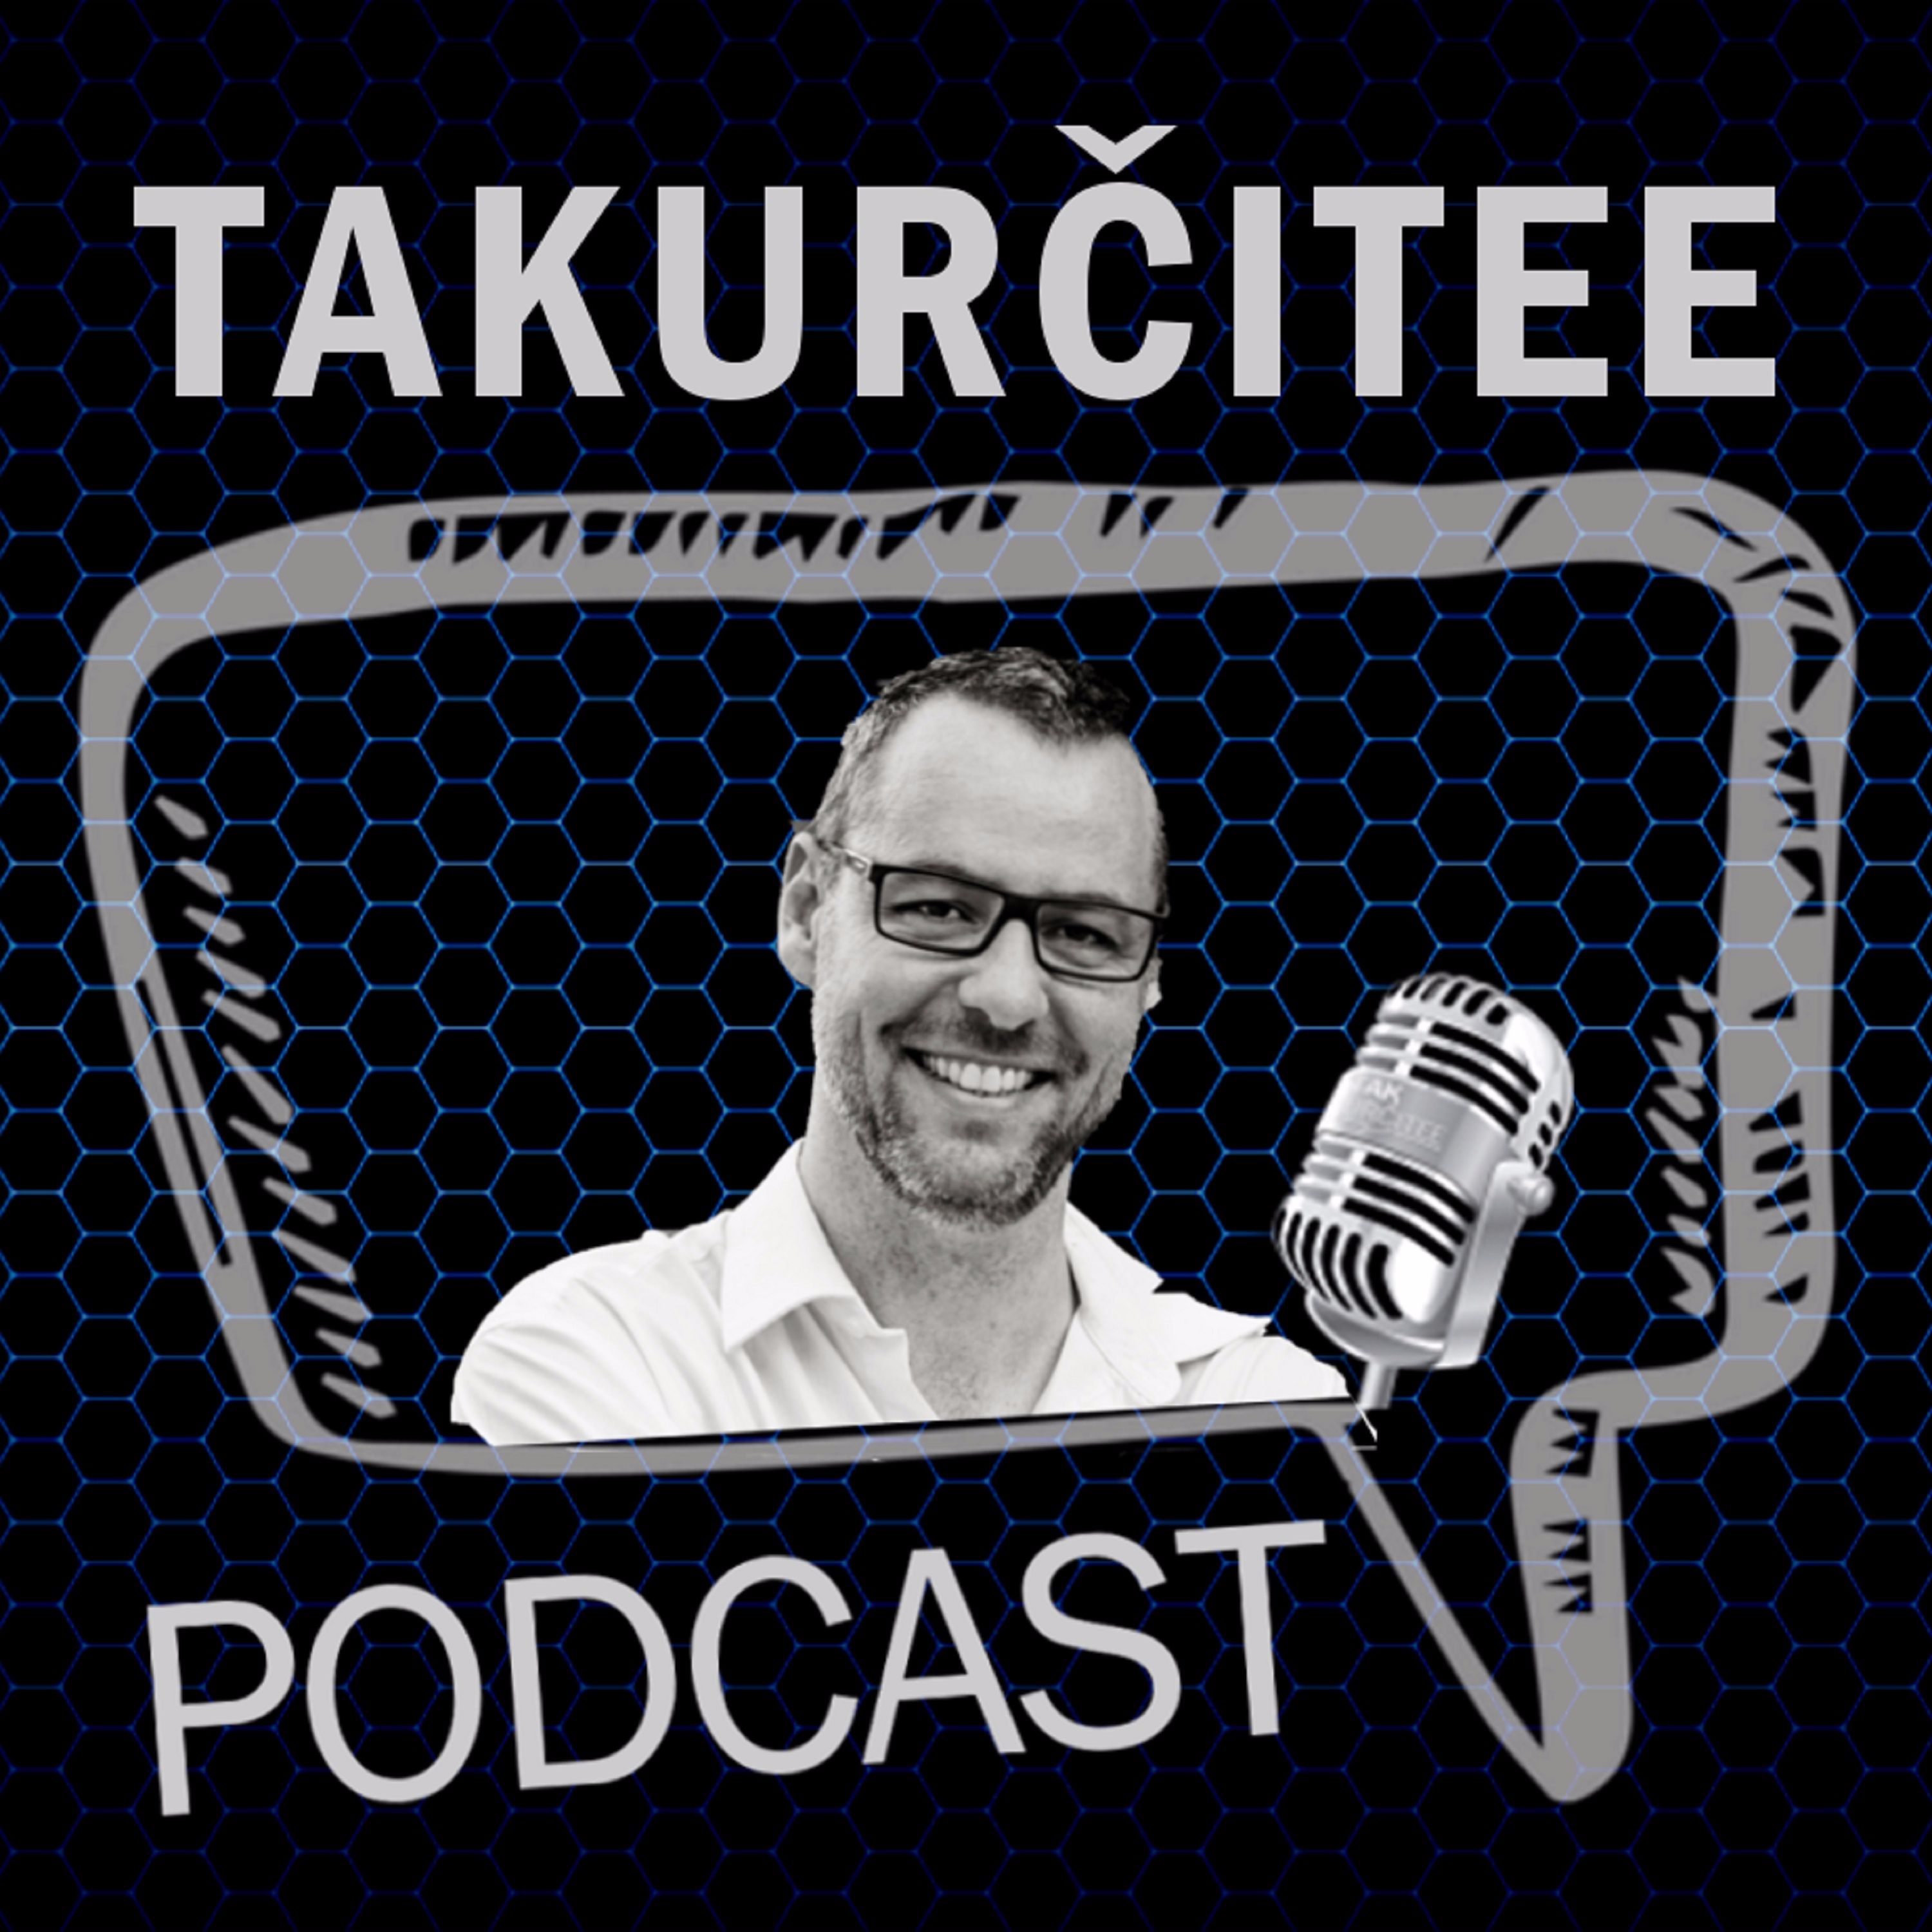 TakUrčitee Podcast, Ep. 30: The Hockey Ninja